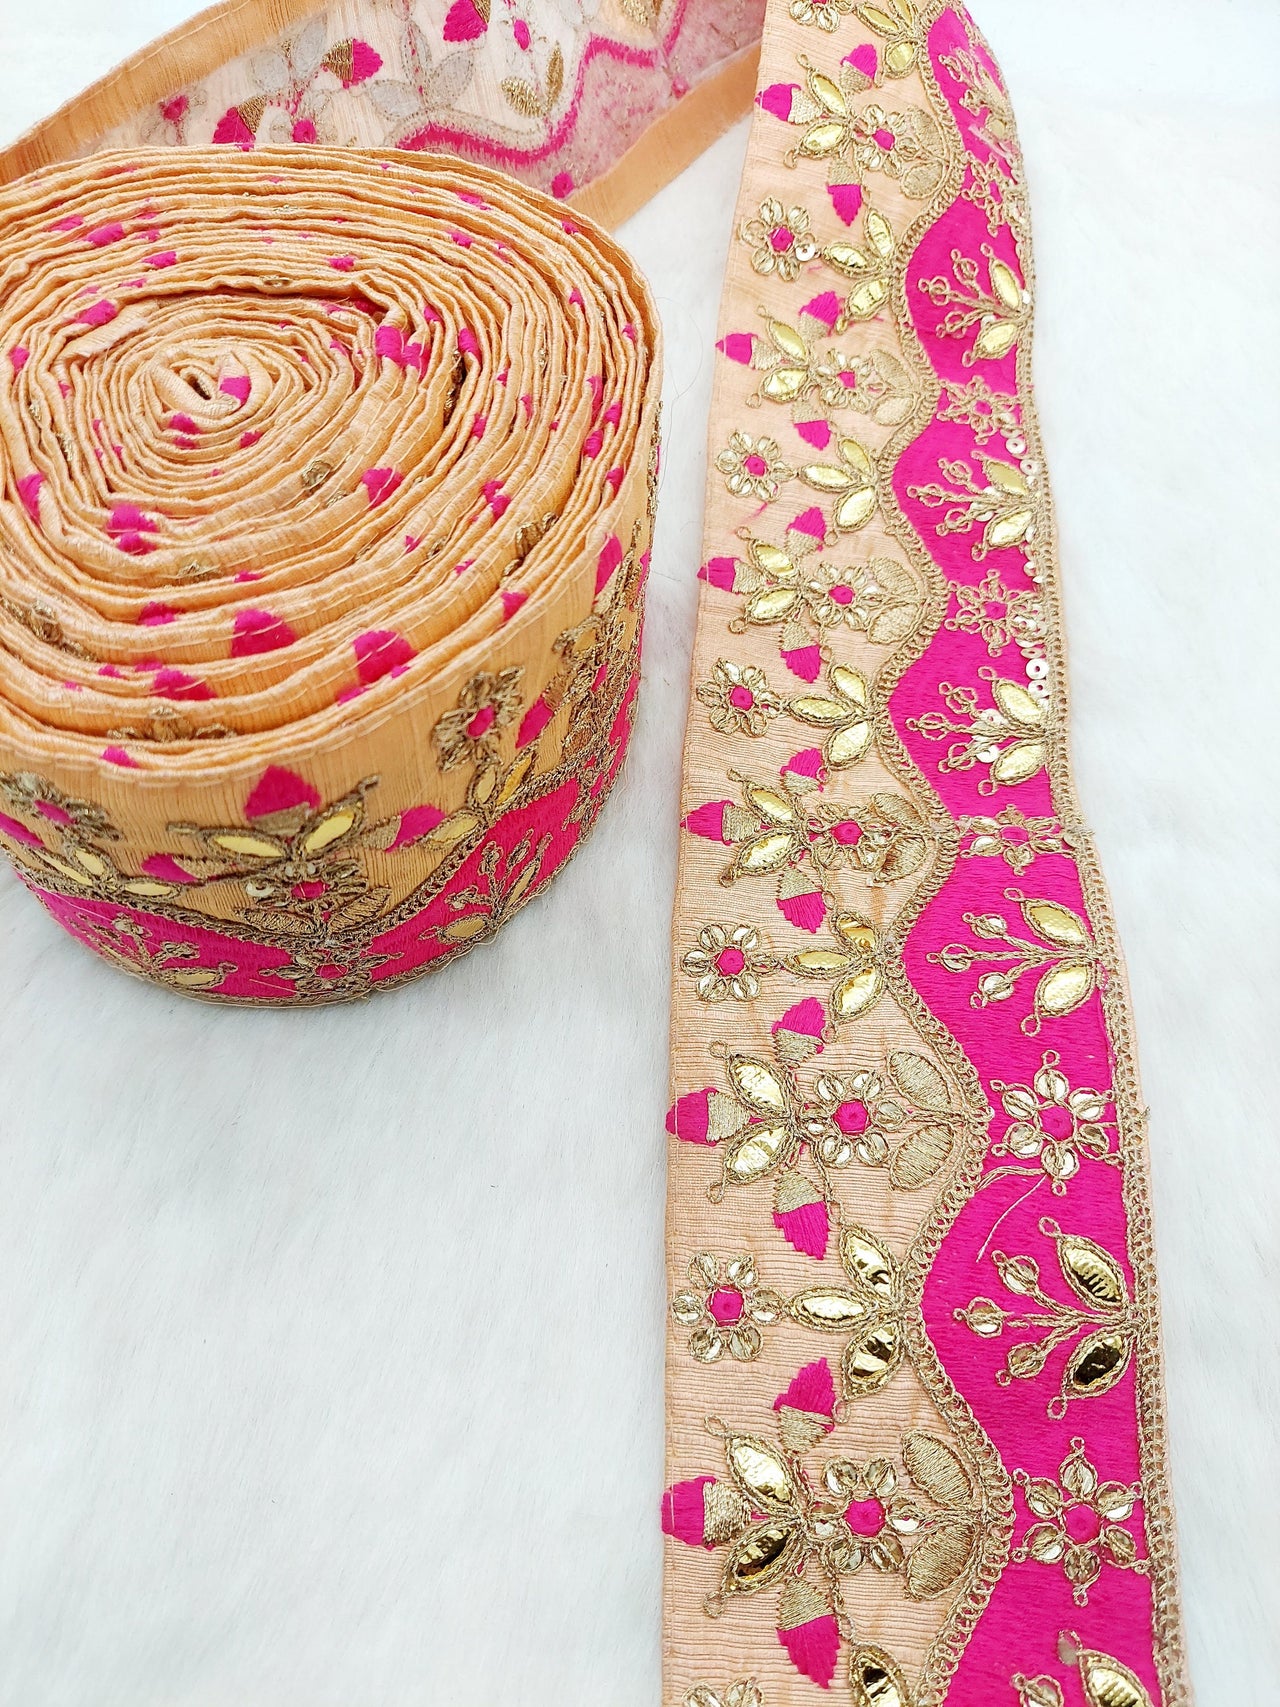 Silk Fabric Trim, Floral Embroidery Gold Gota Patti Indian Sari Border Trim By Yard Decorative Trim Craft Lace